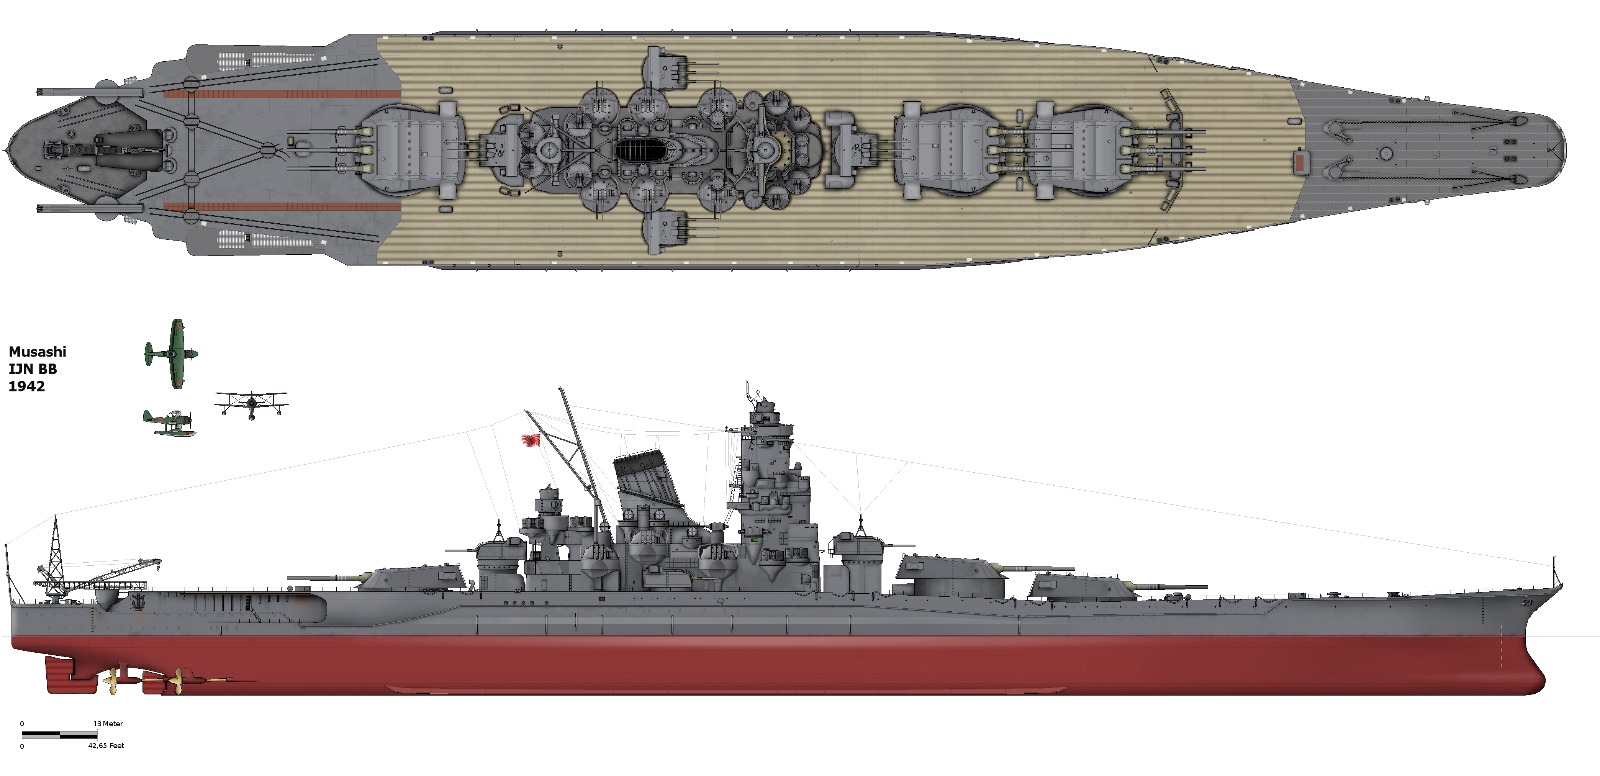 Musashi: Japan's Remarkable 73,000 Ton Monster Battleship